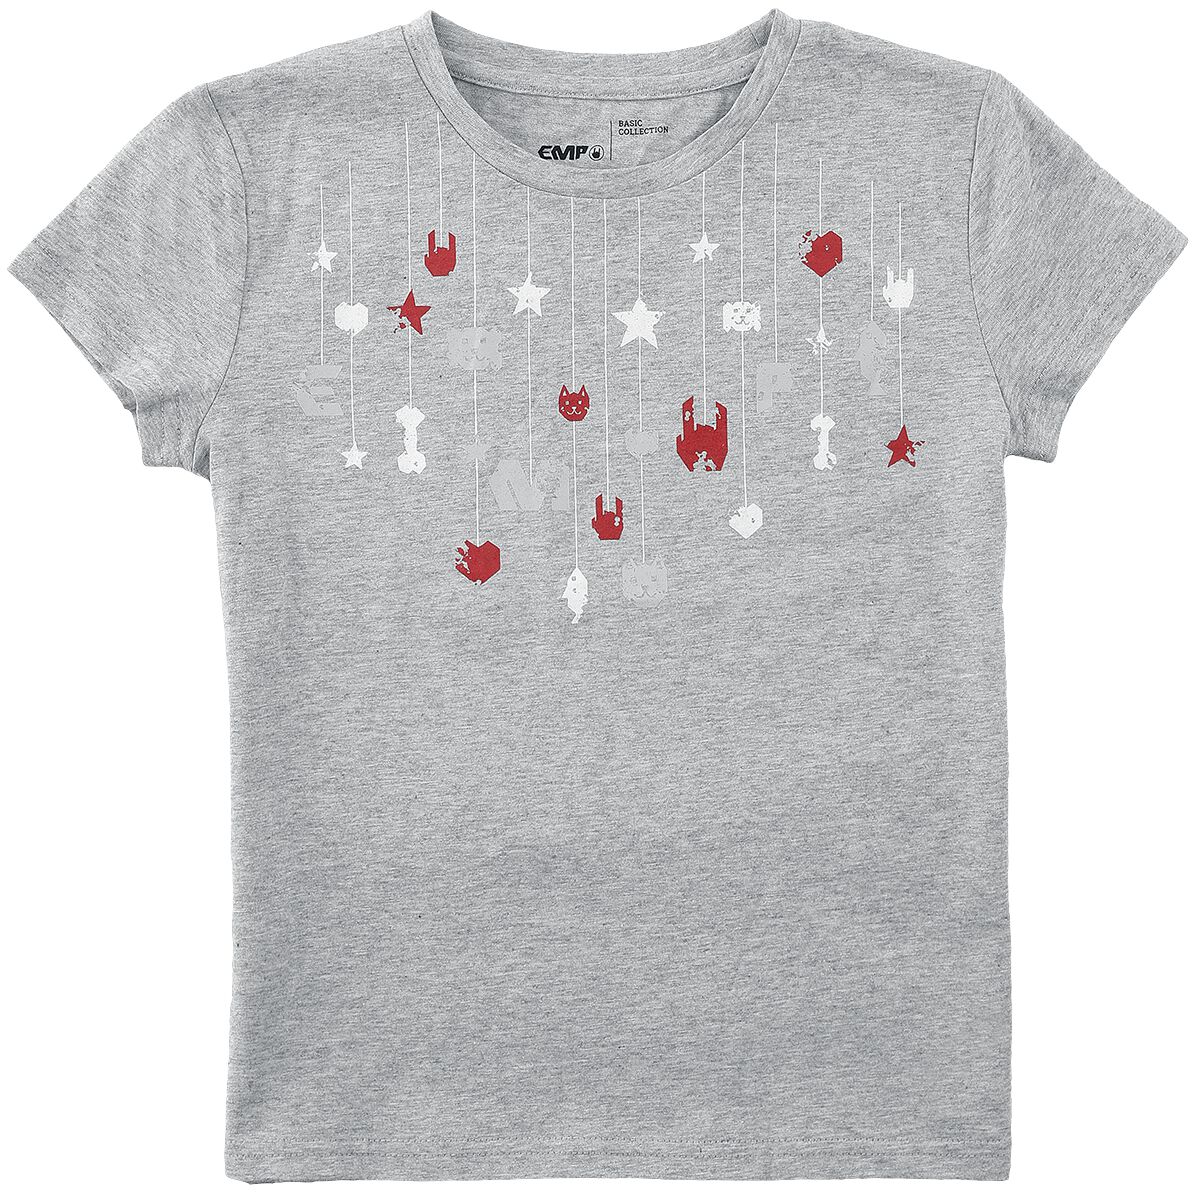 T-shirt de Collection EMP Stage - Kids T-Shirt mit Rockhand und Sternen - 92 à 134/140 - pour garçon